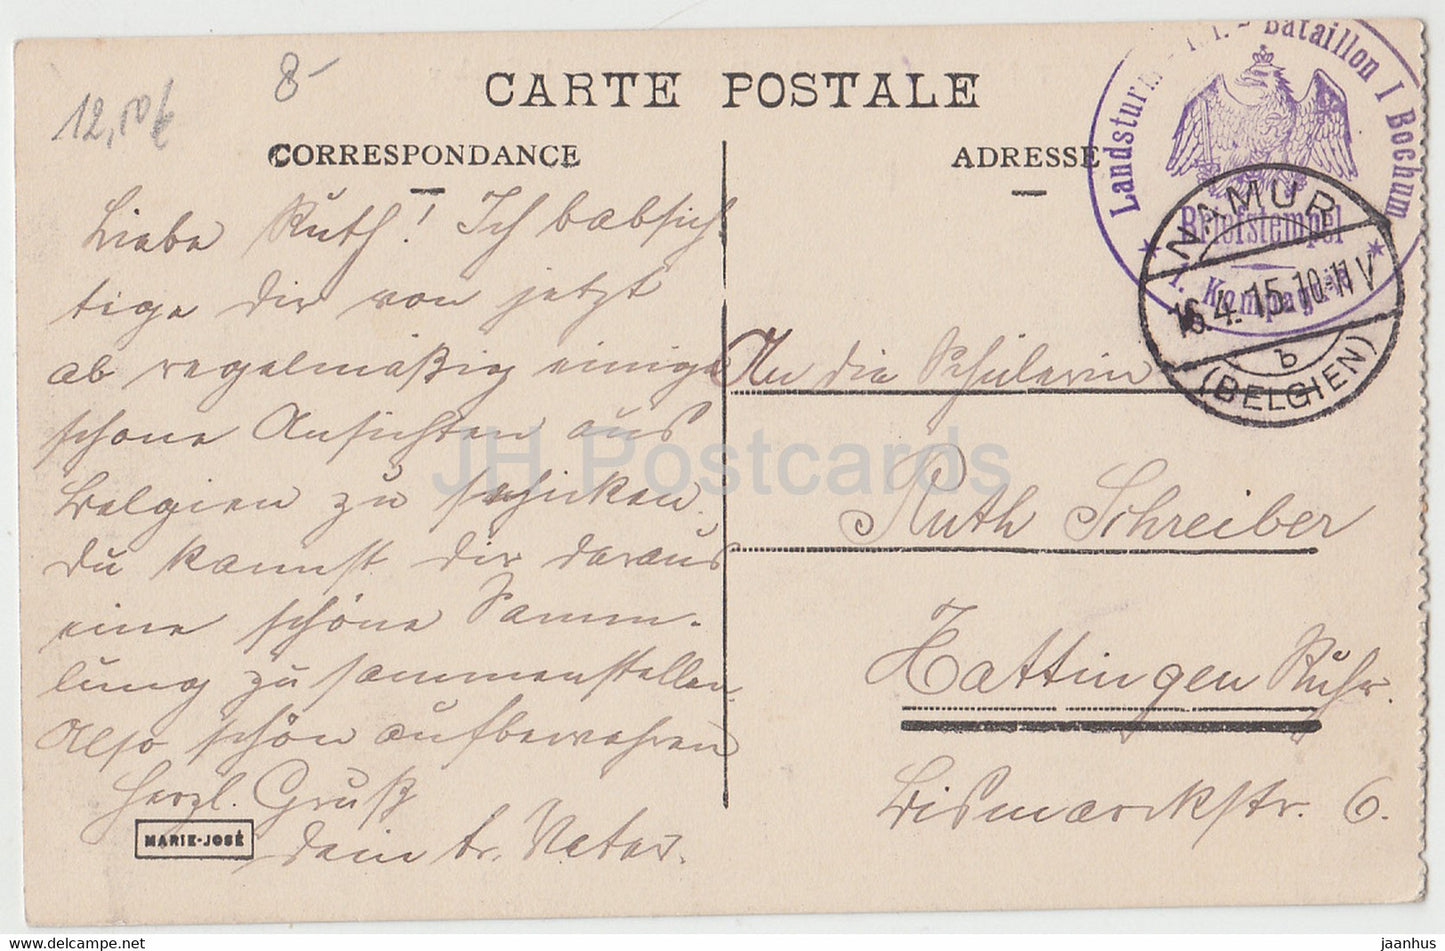 Namur - Citadelle - Panorama vers la Sambre - Landsturm Inf Bataillon - Feldpost - old postcard - 1915 - Belgium - used